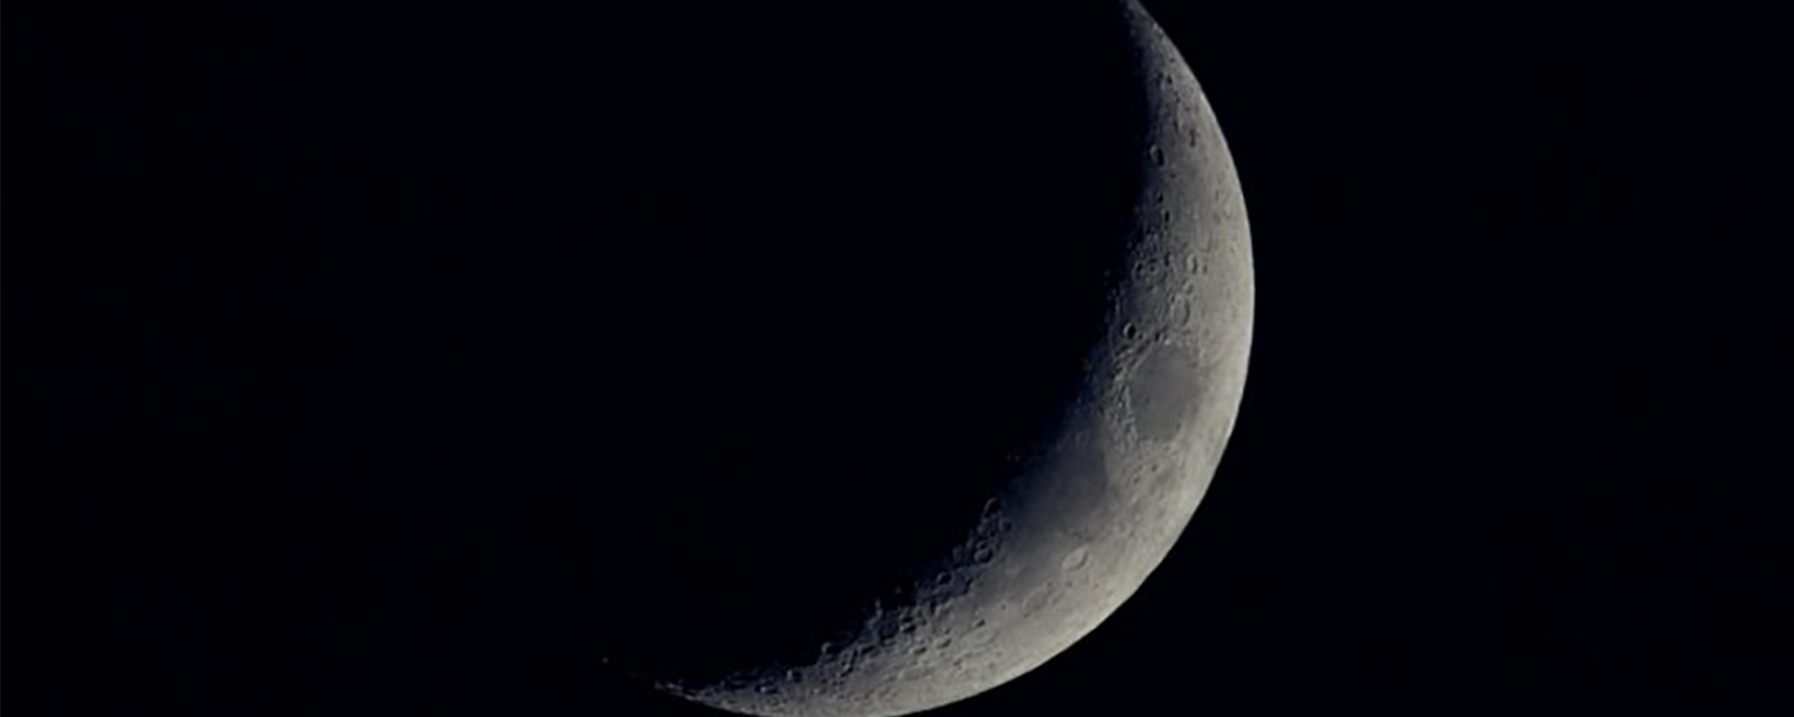 NASA to Celebrate International Observe the Moon Night Oct. 20